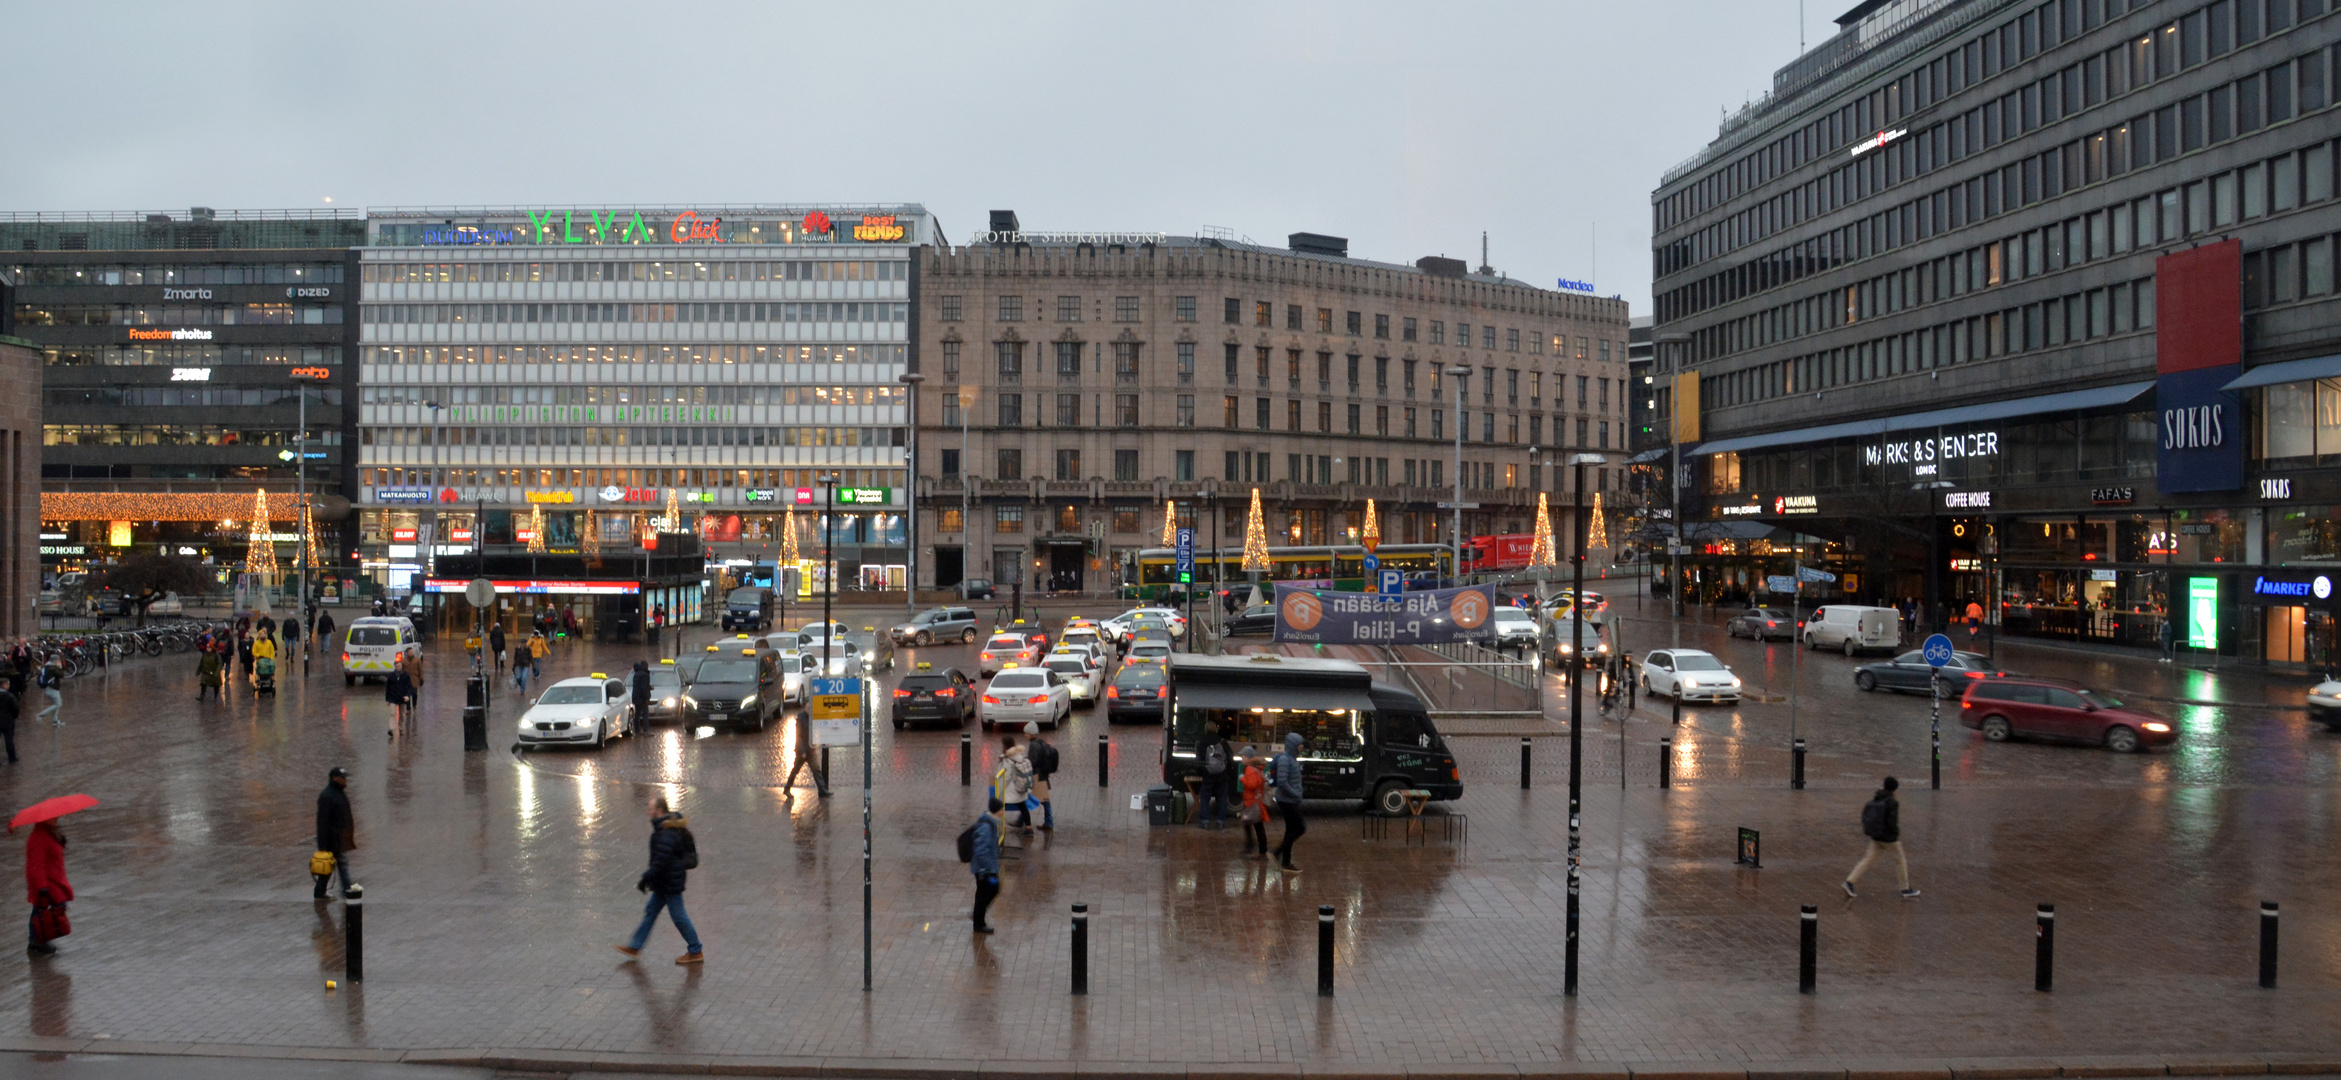 Rainyday on Helsinki, The square of railway station